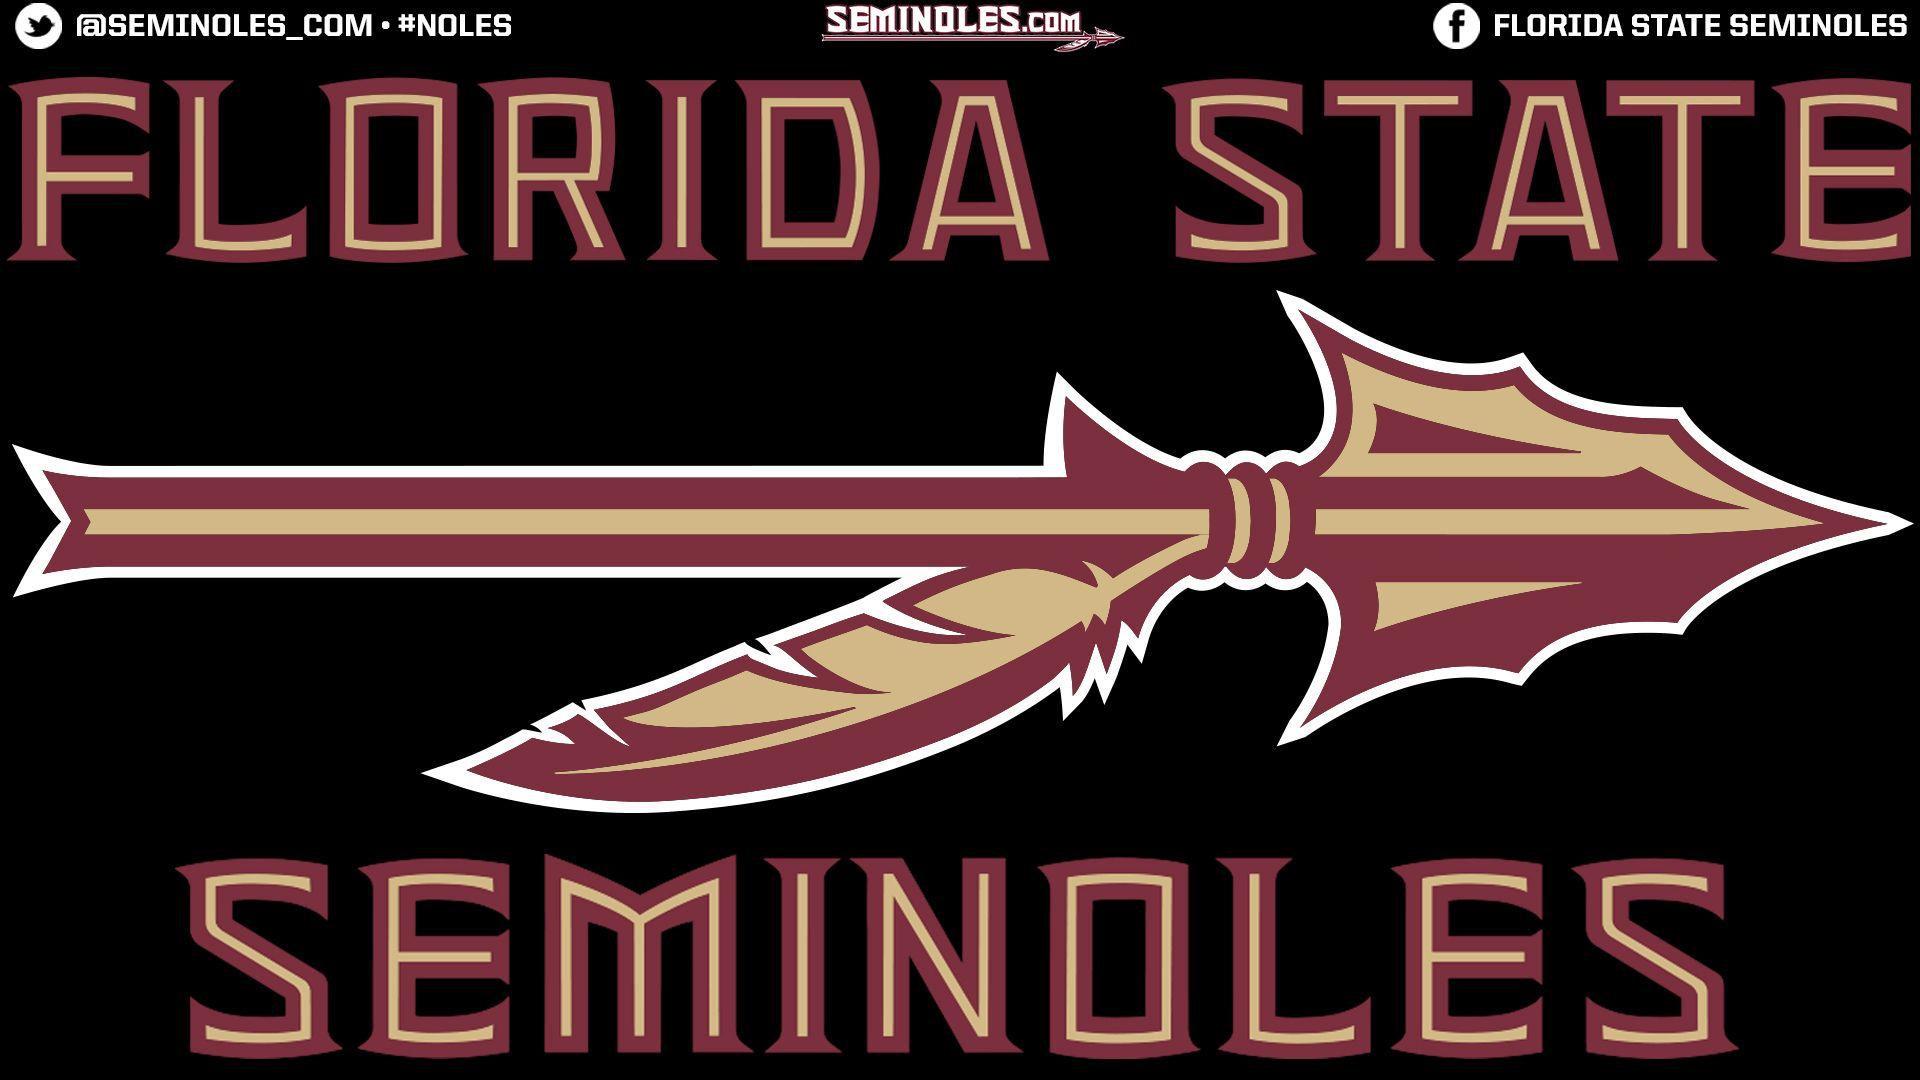 Florida State Football Logo - Seminoles.com Desktop Wallpapers